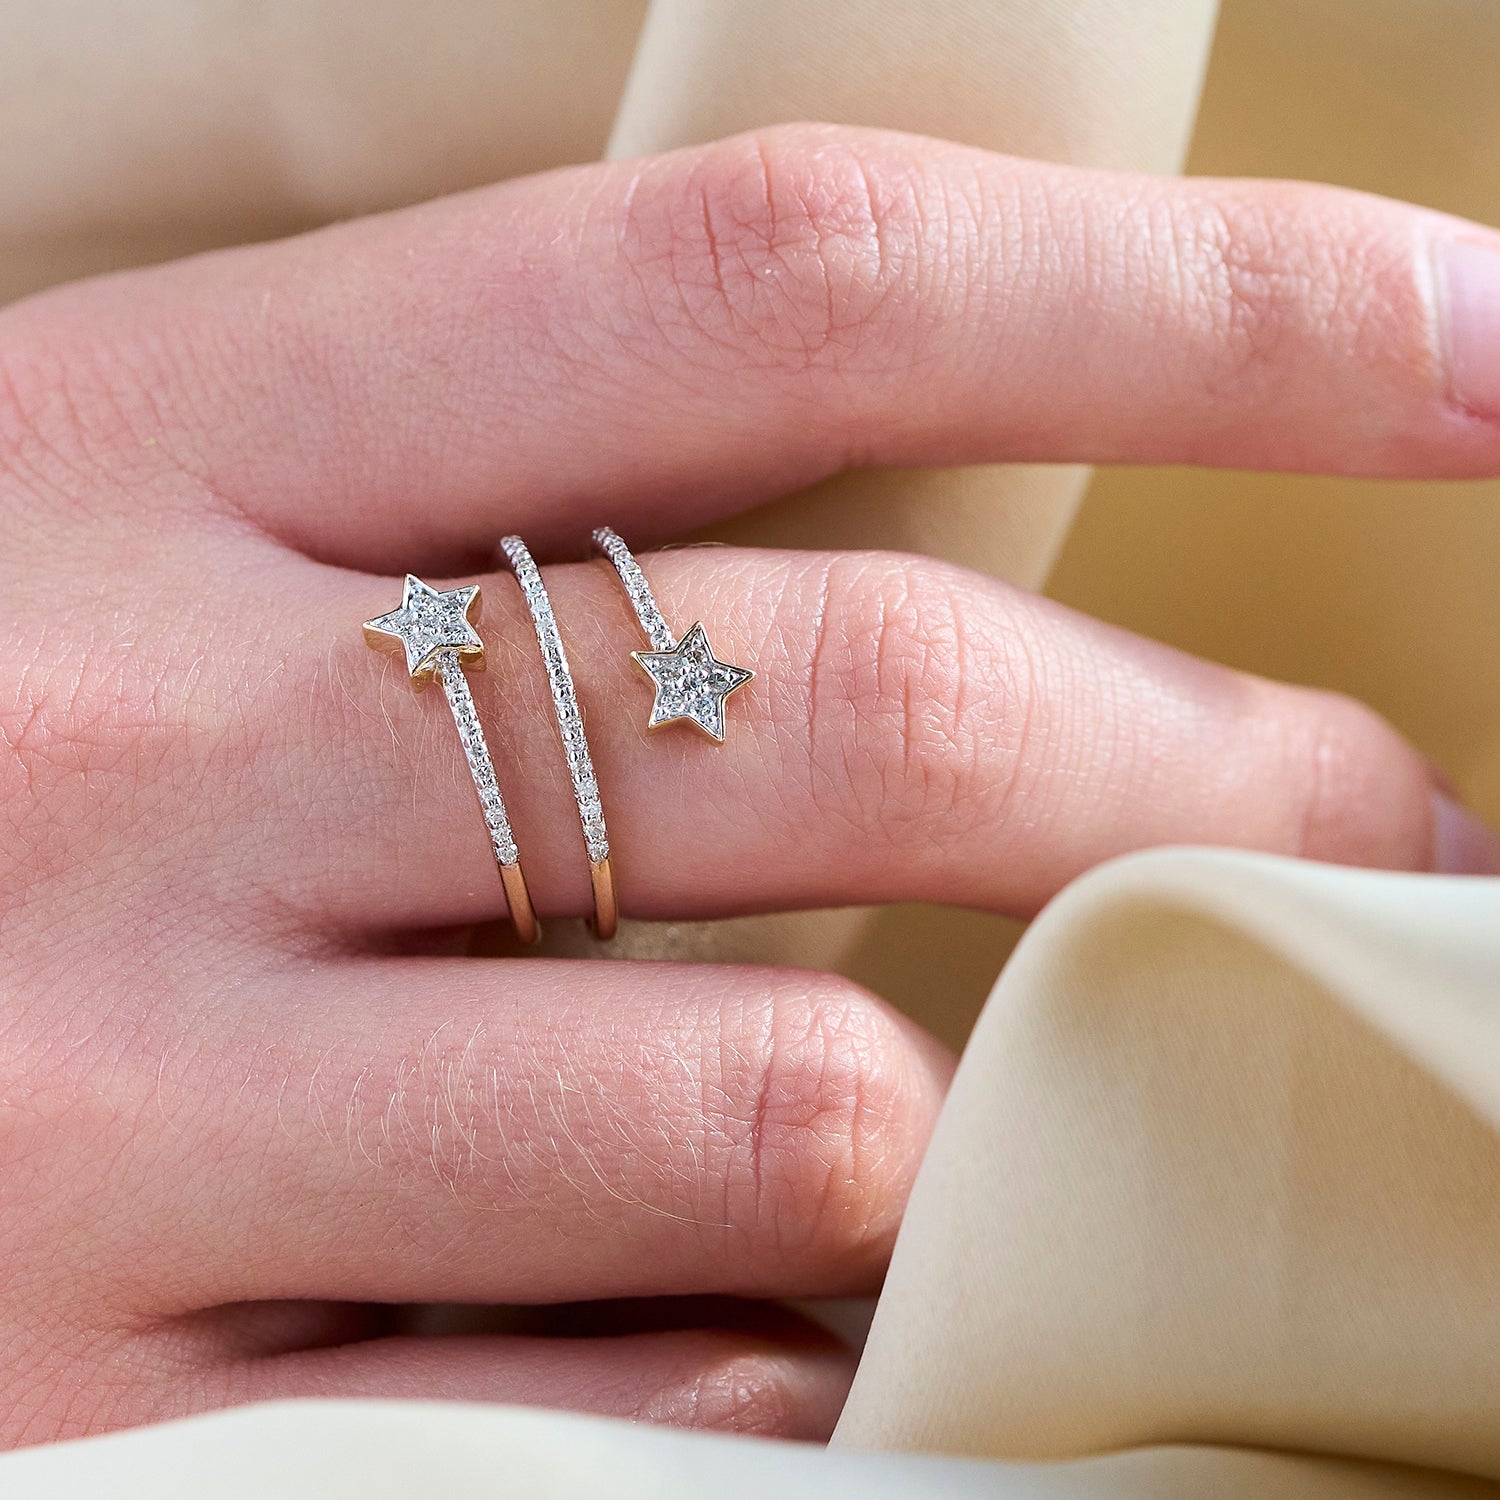 Celeste Diamond Star Open Spiral Ring In Lady's Hand